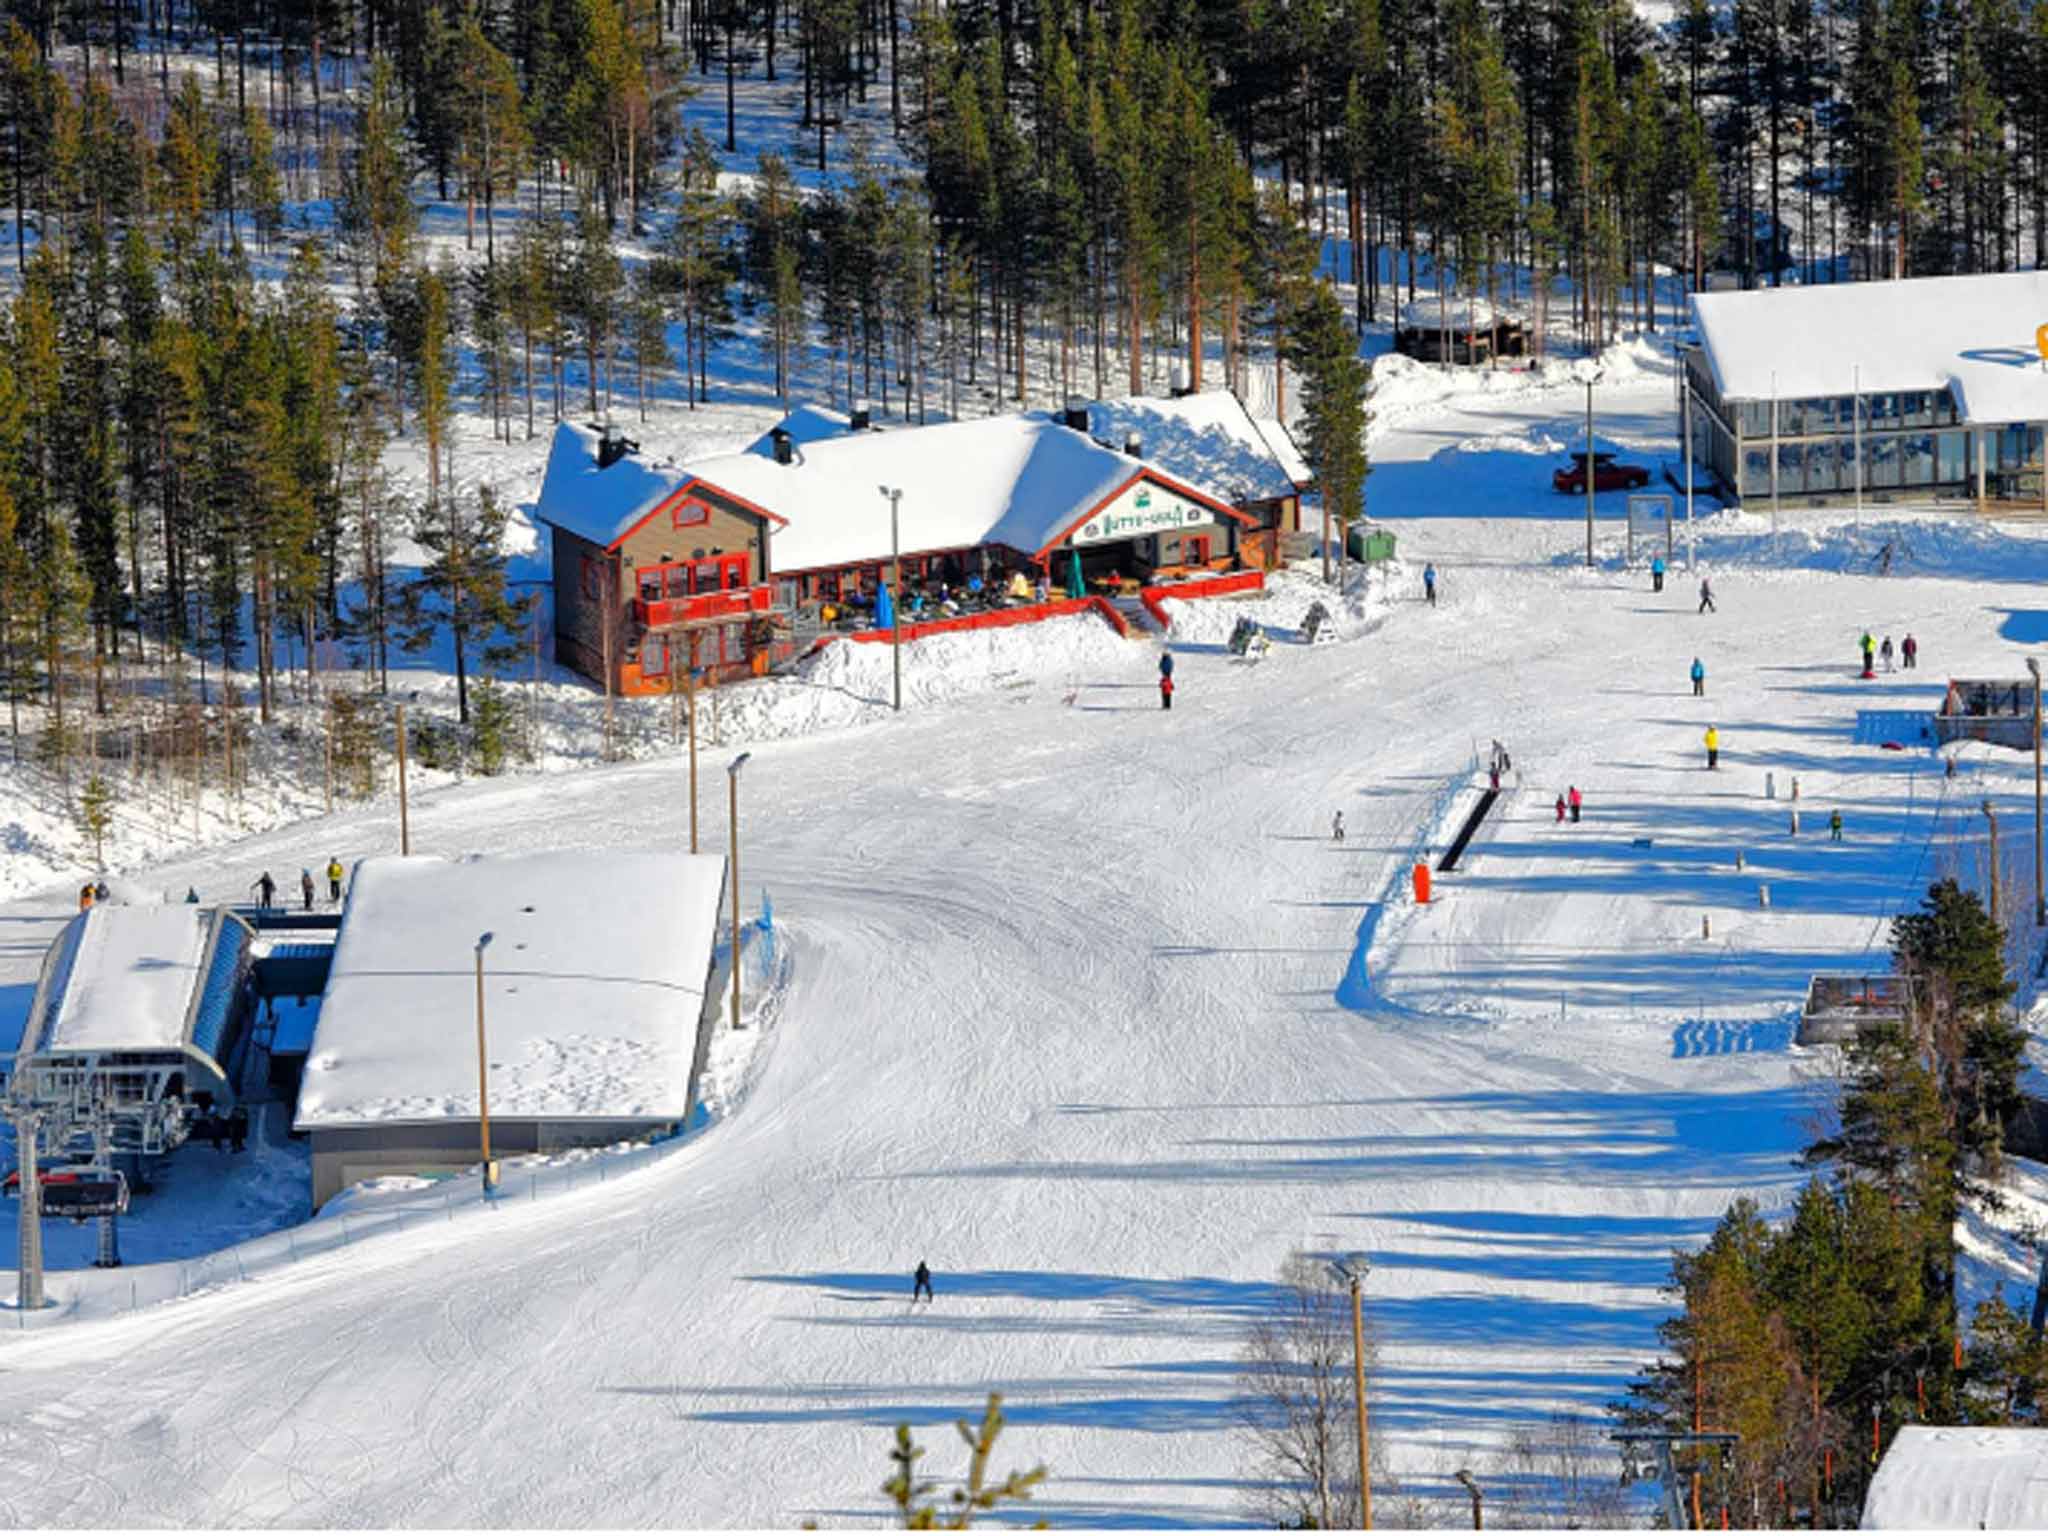 Finnish line: Pyha boasts both Nordic and Alpine skiing